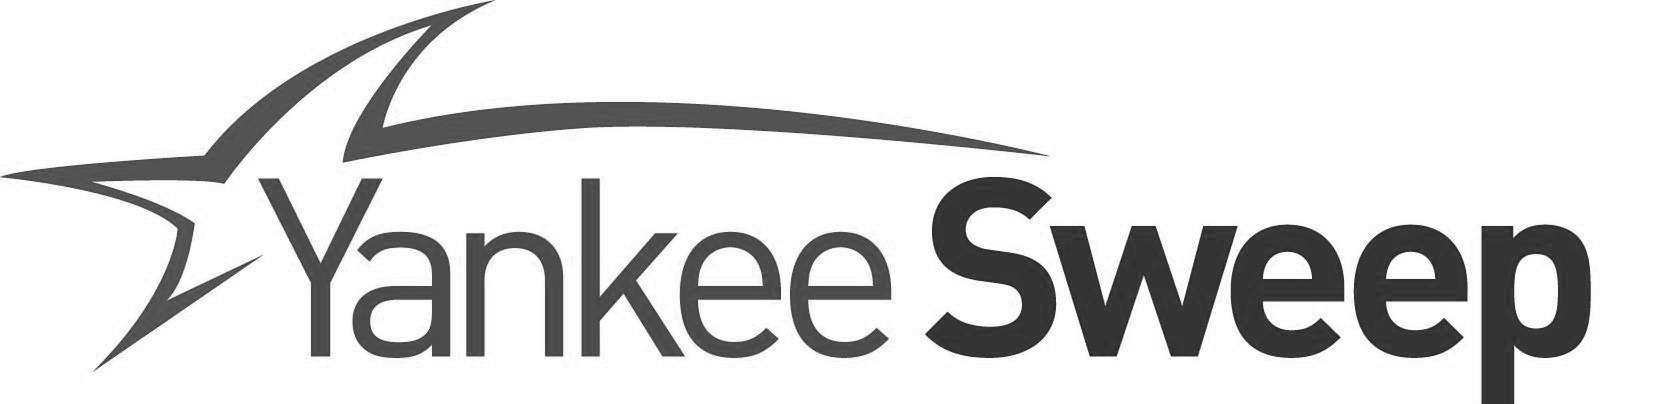 Trademark Logo YANKEE SWEEP